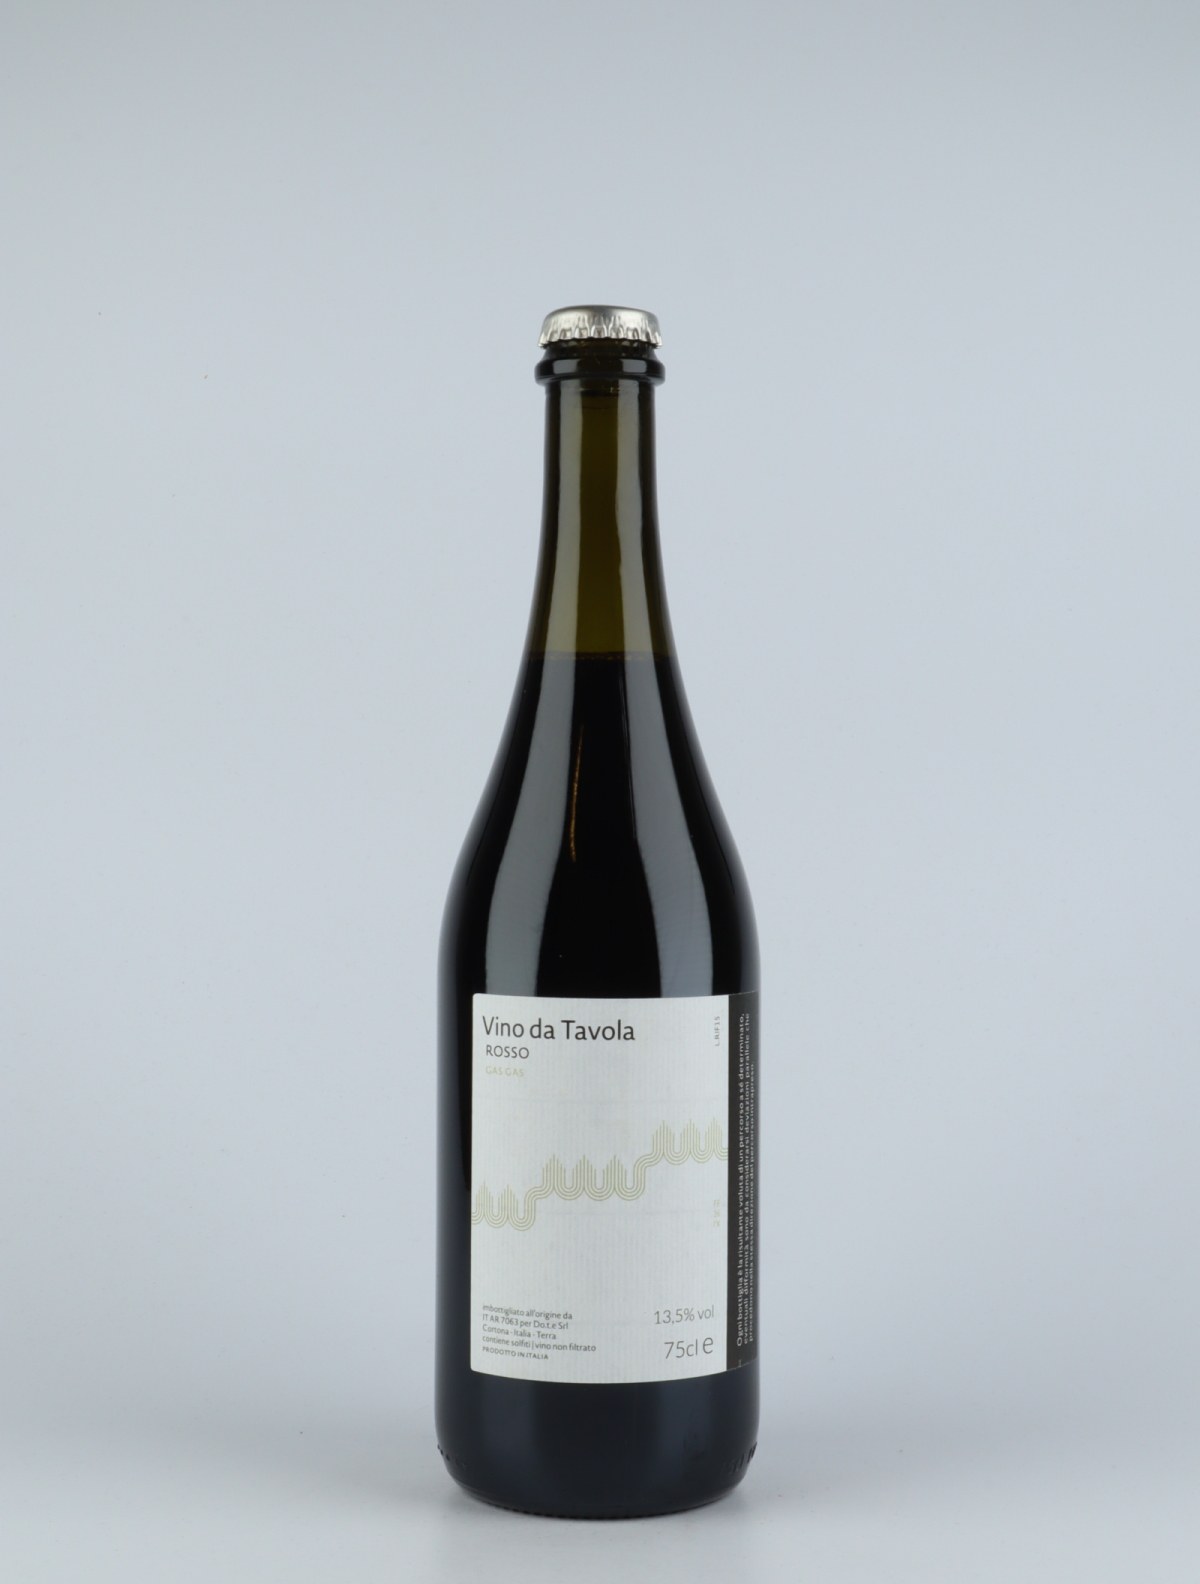 En flaske 2015 Gas Gas Rødvin fra do.t.e Vini, Toscana i Italien